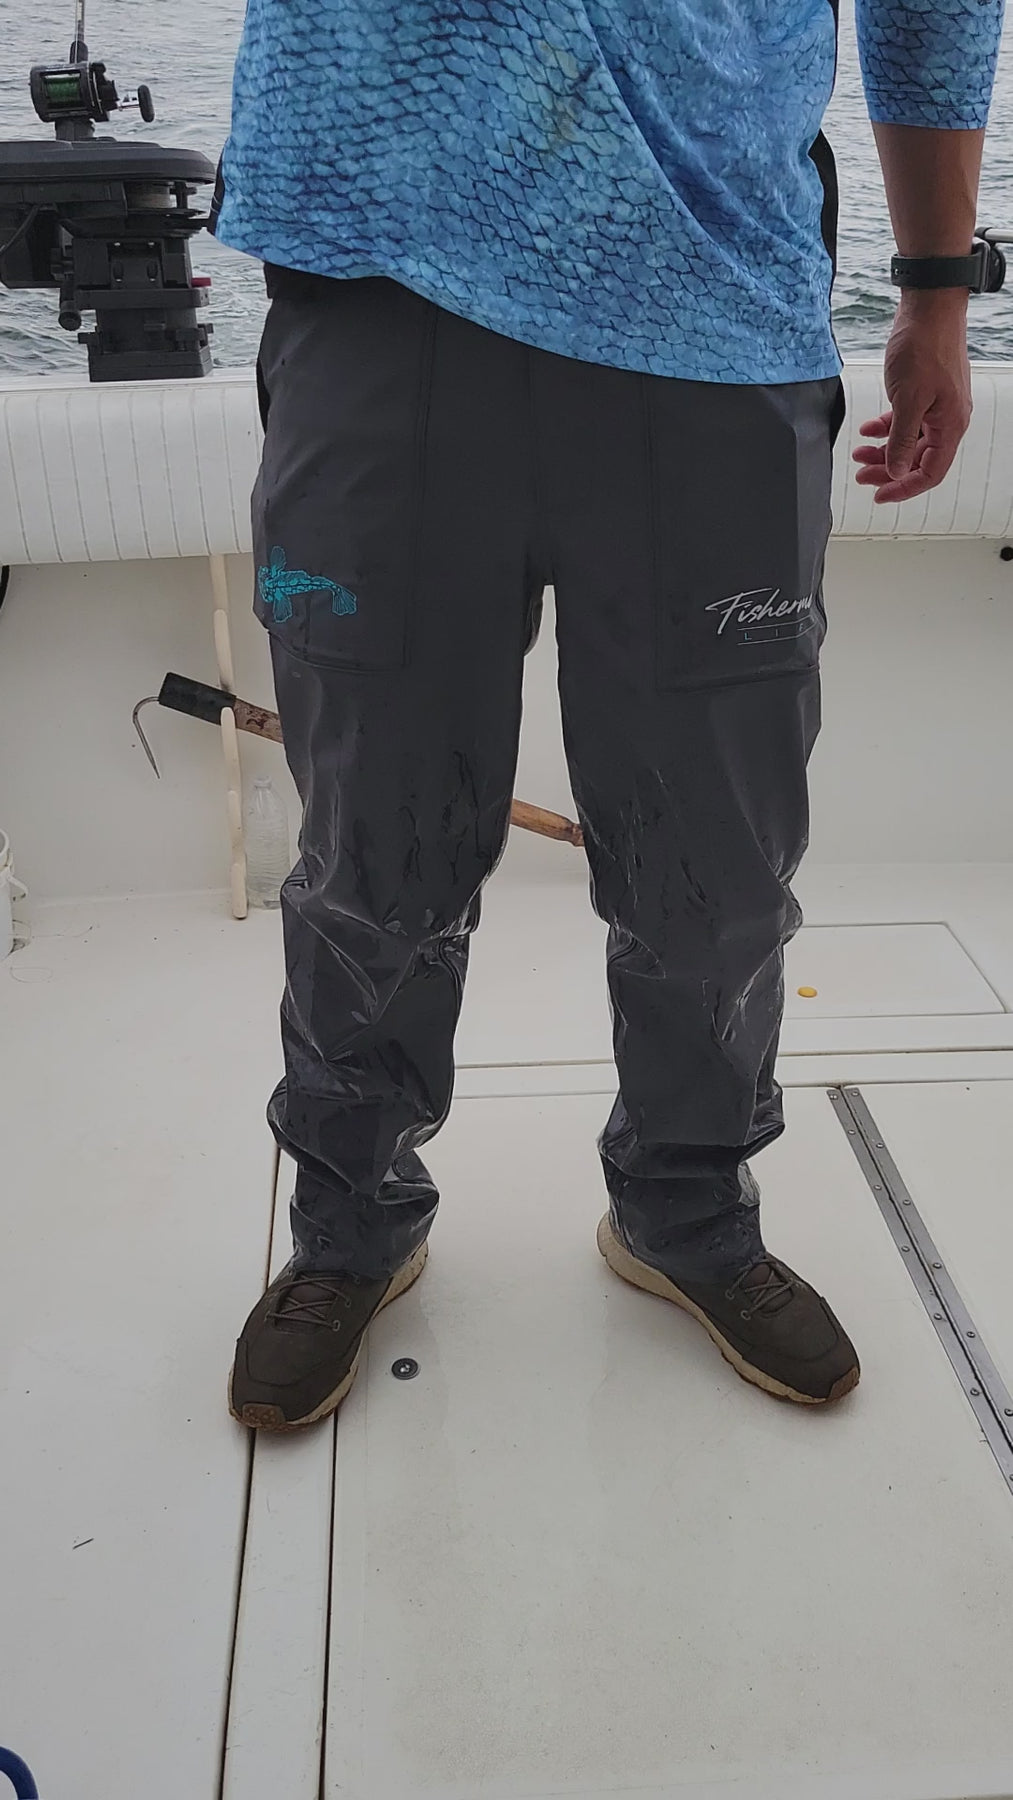 Ultimate Waterproof Pants (Fleece Lined) 10,000 mm Rated